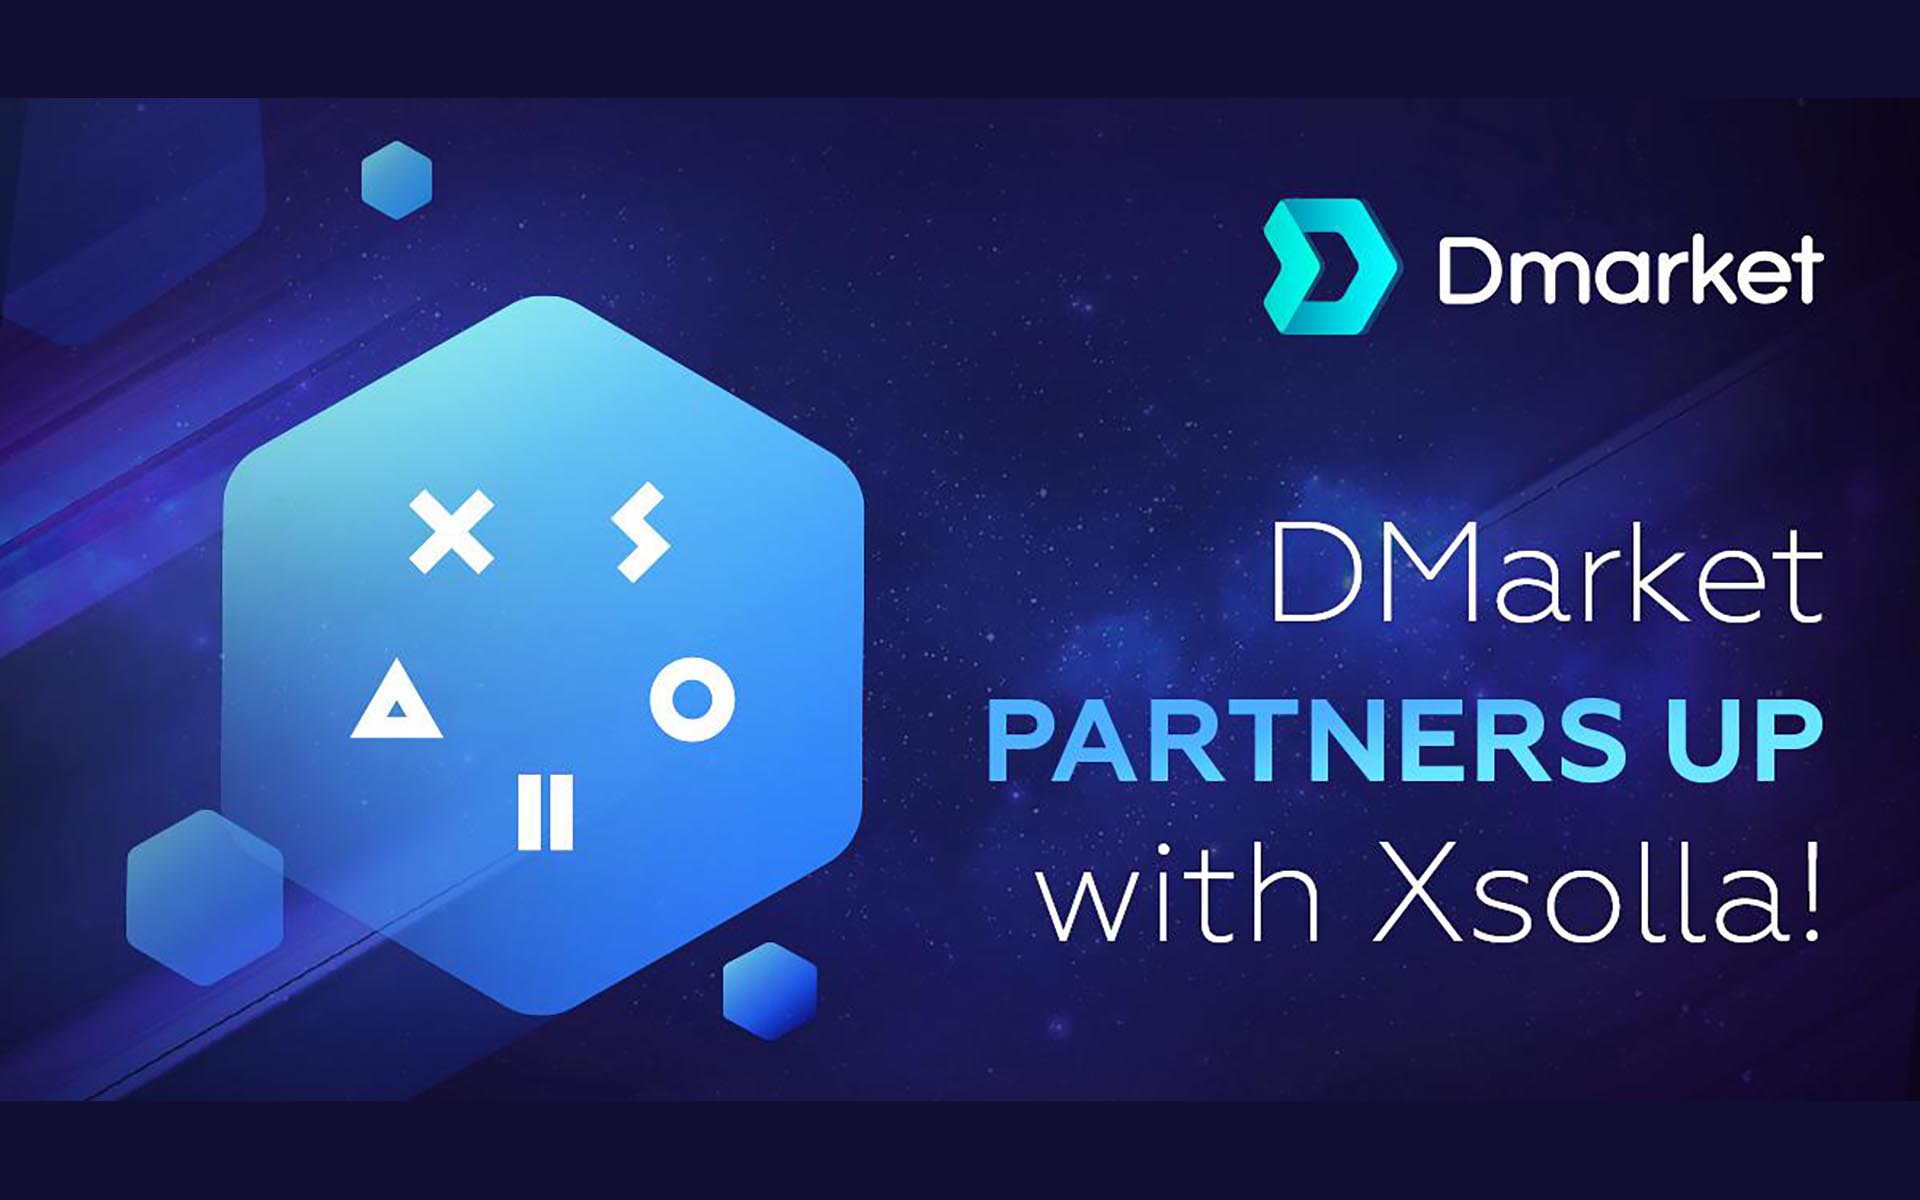 DMarket Announces Partnership with Xsolla